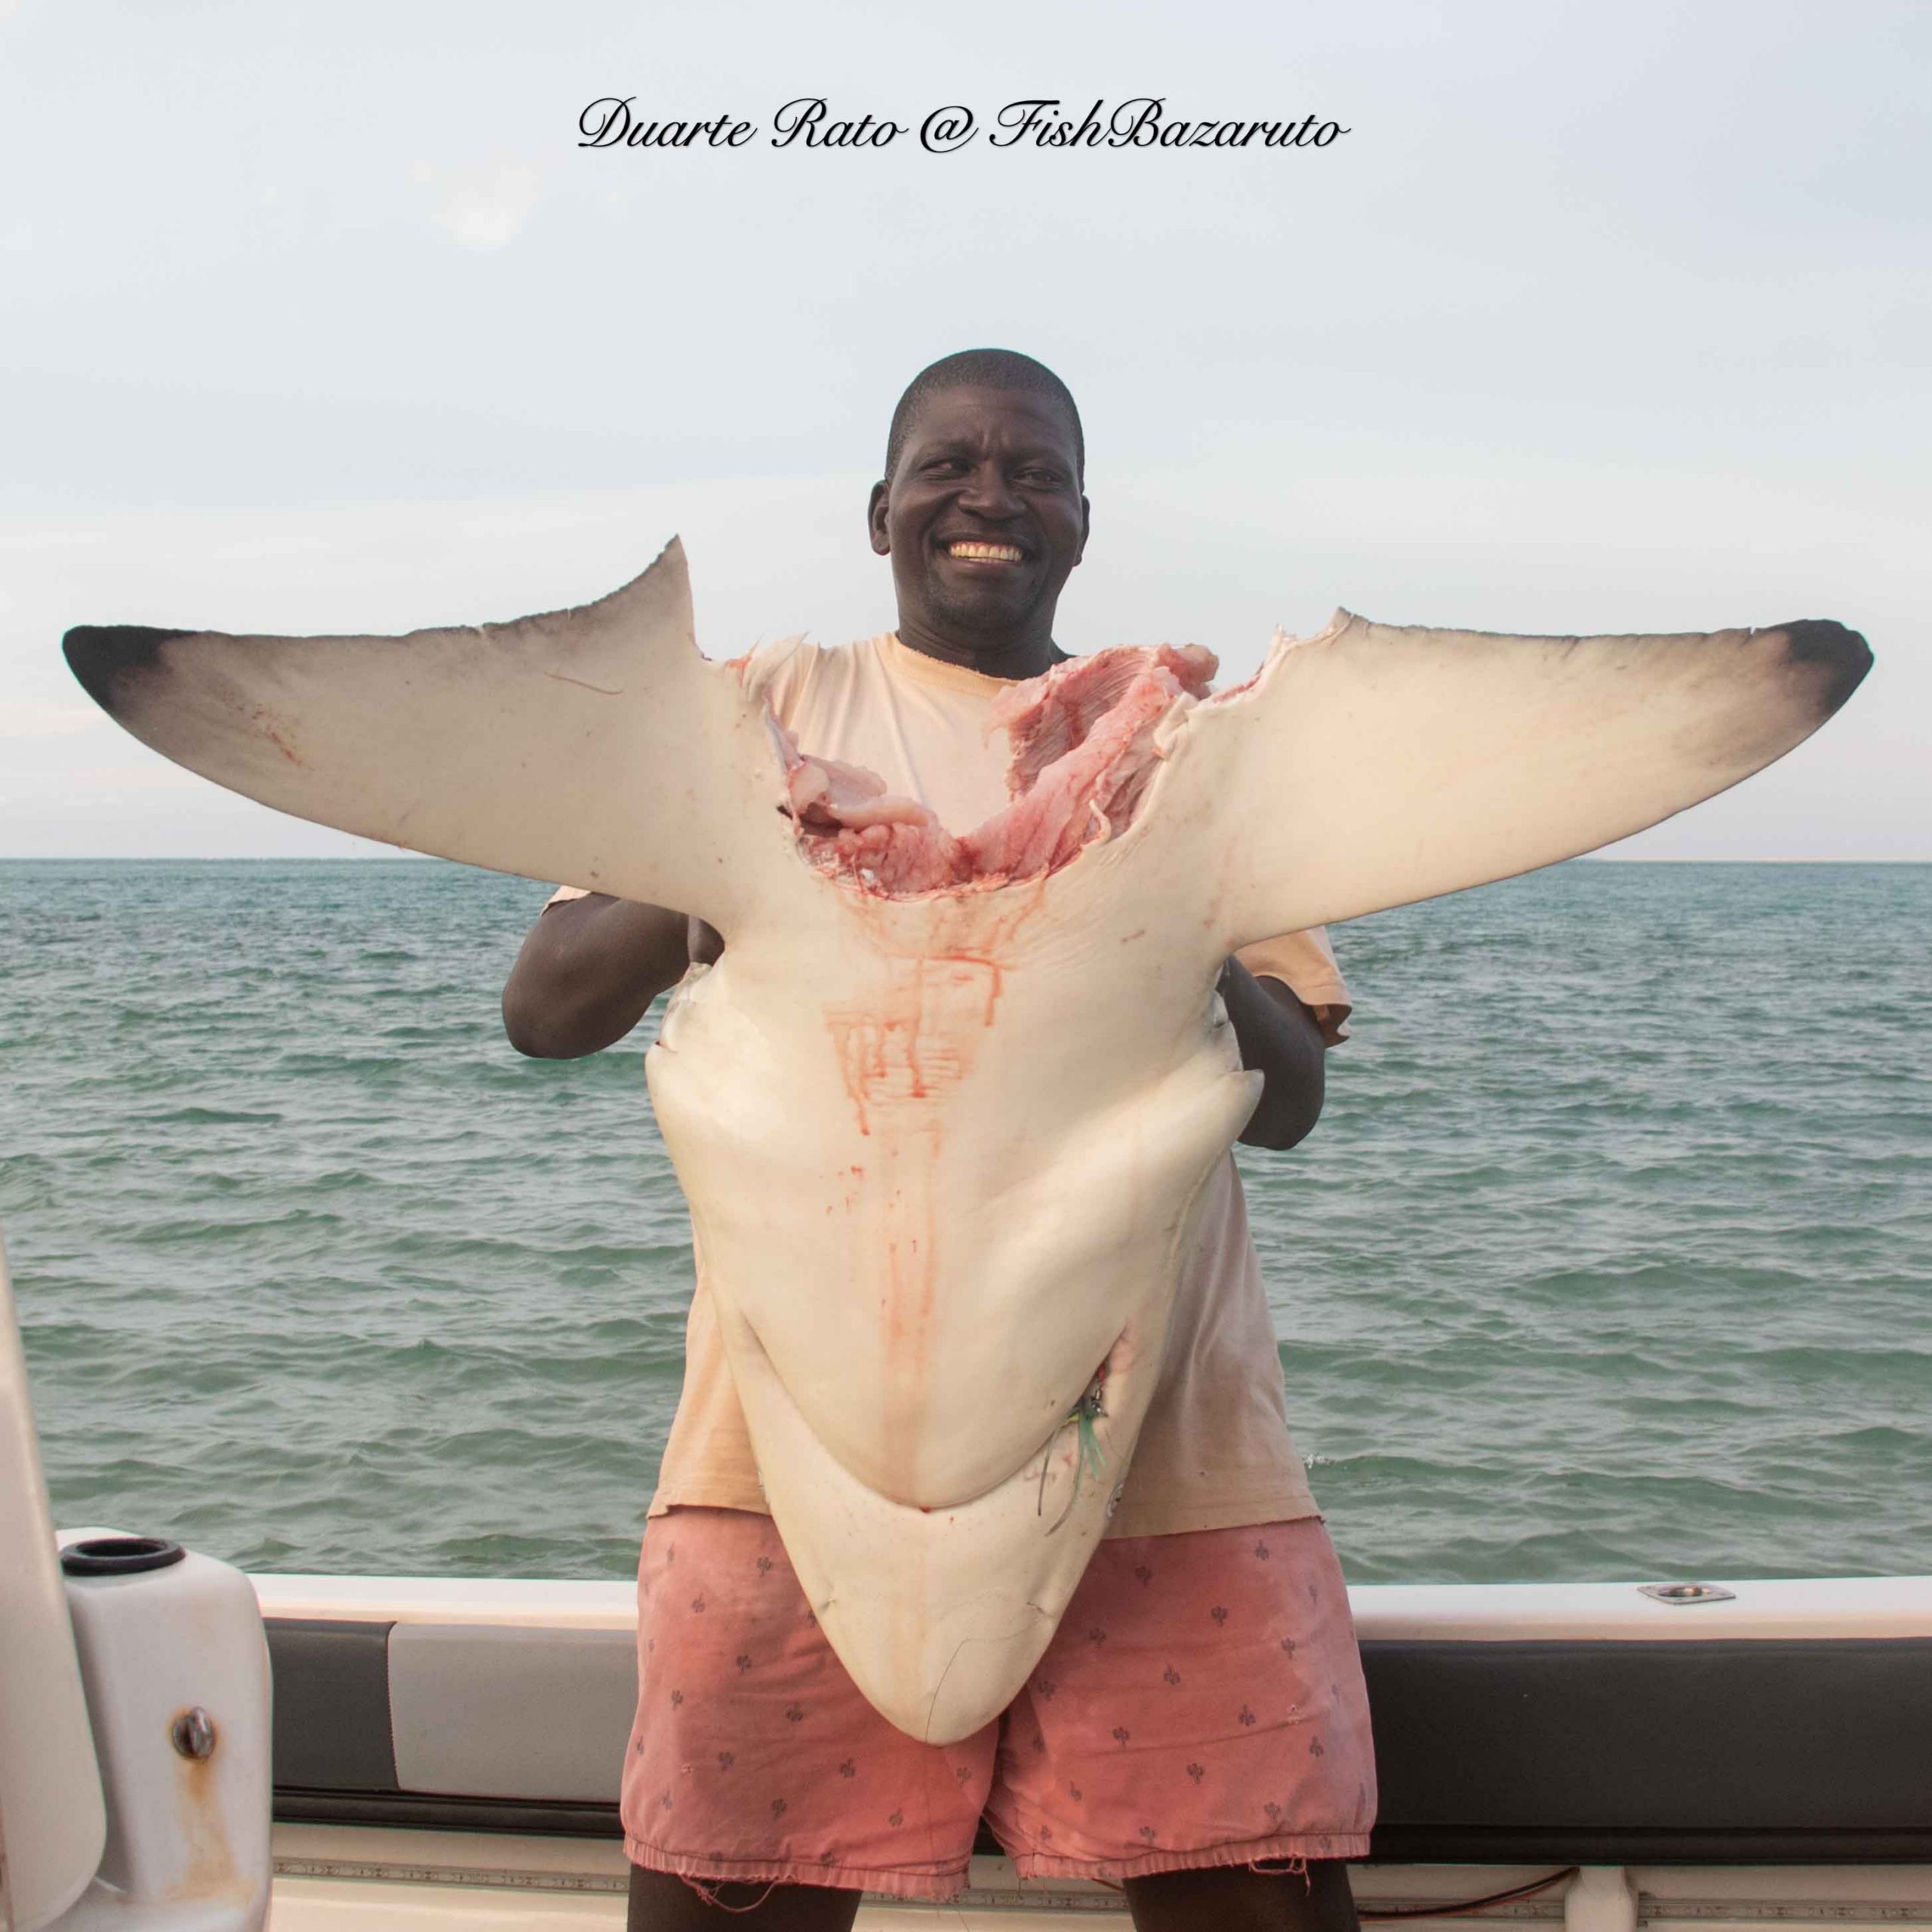 When a shark gets sharked Bazaruto Island